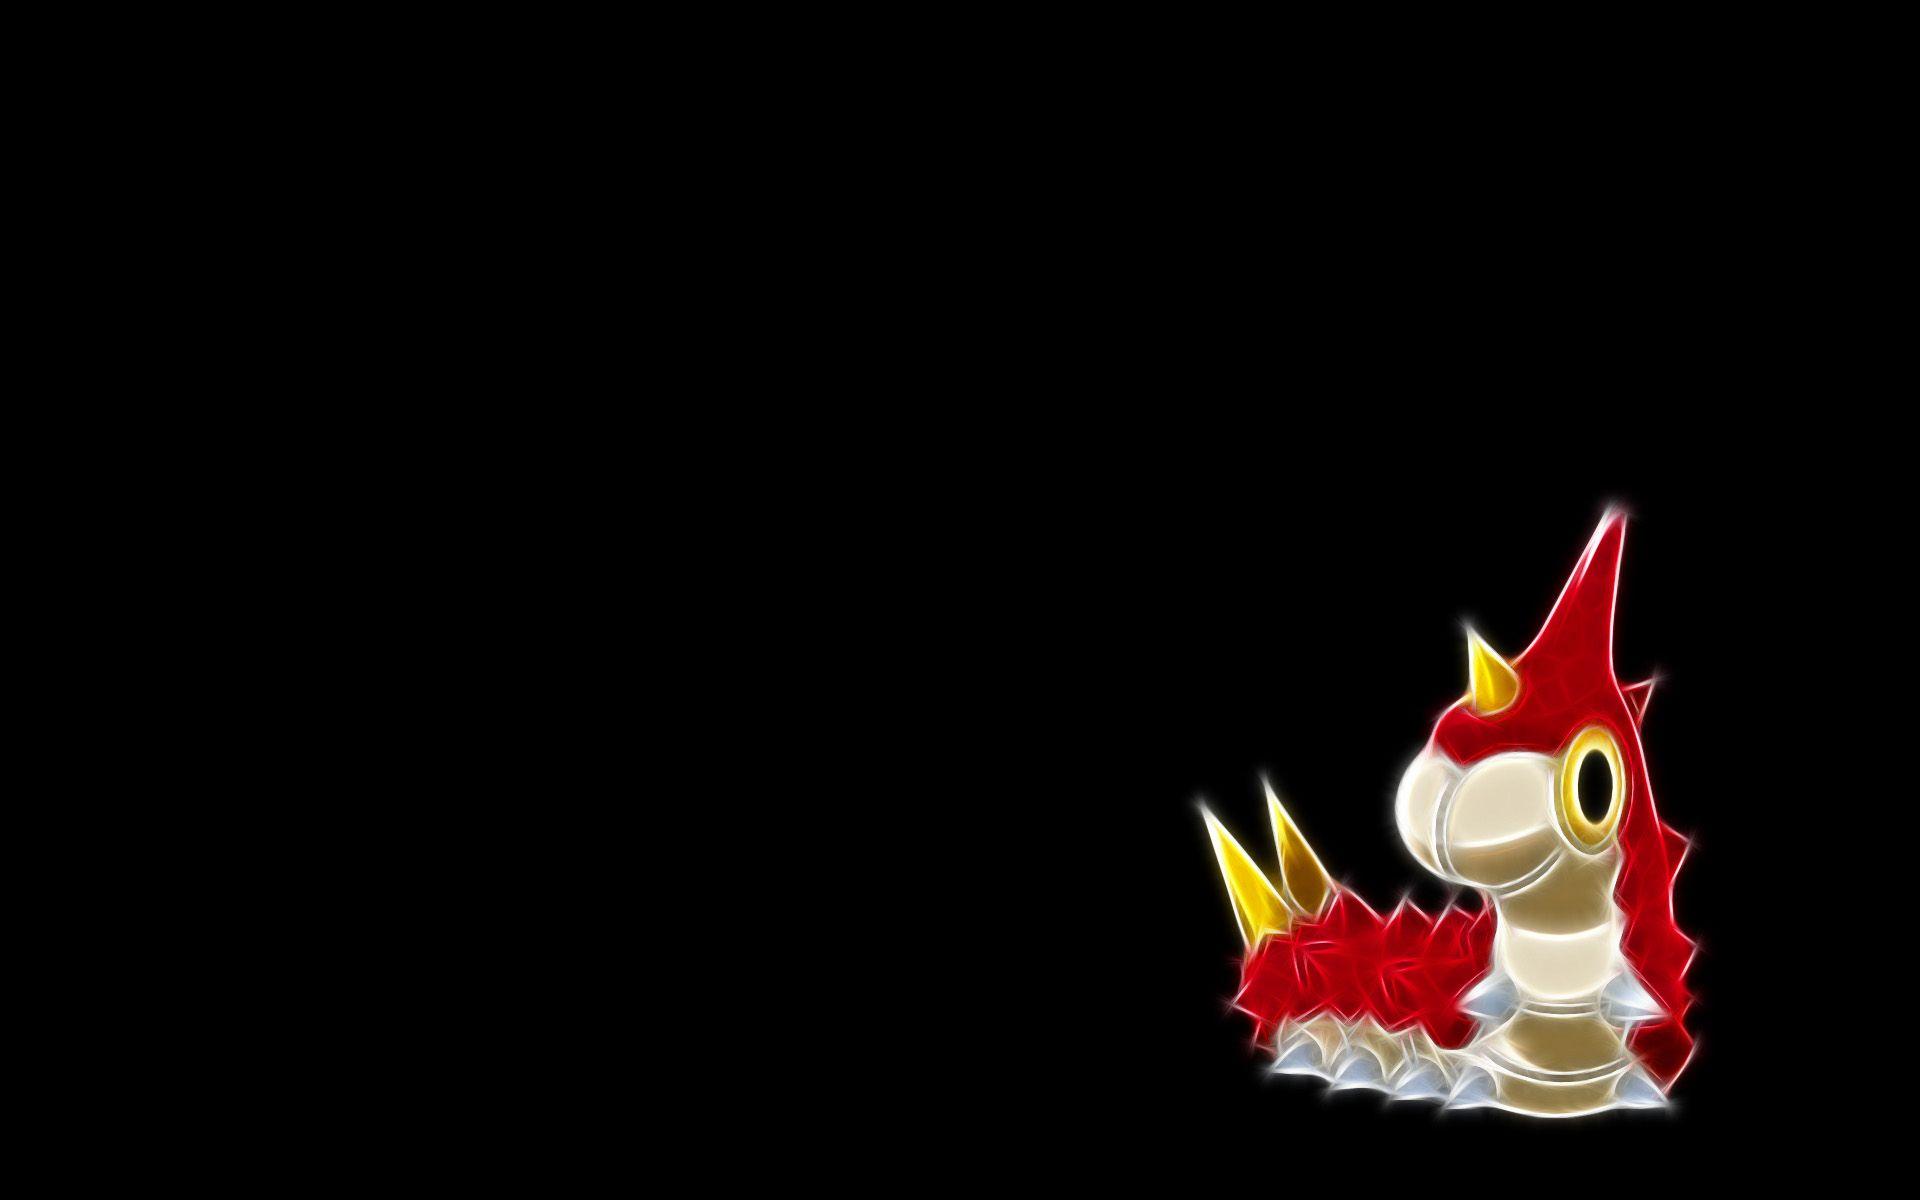 Wurmple (Pokémon) HD Wallpaper and Background Image